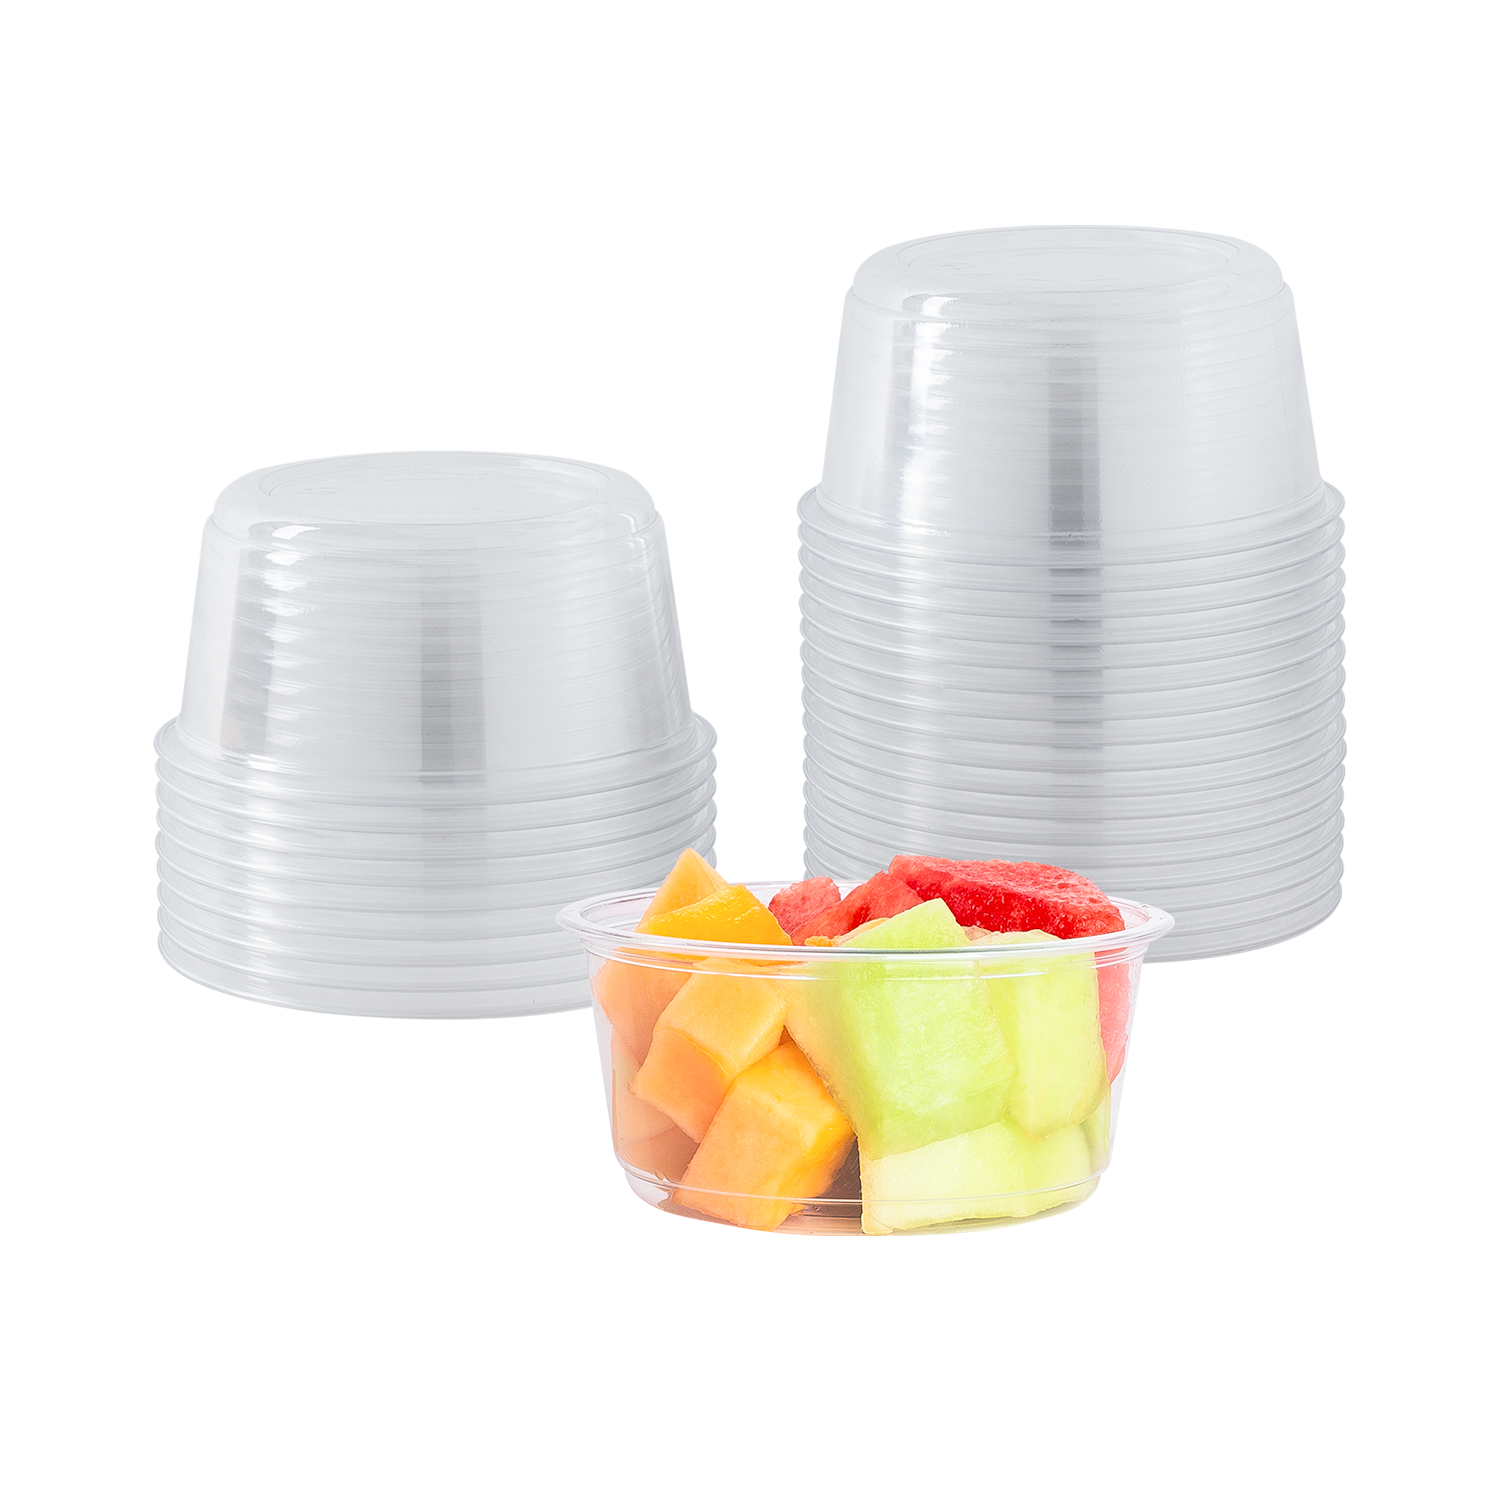 Plastic Deli Containers, Soup Containers 8oz, 16oz, 24oz, 32oz